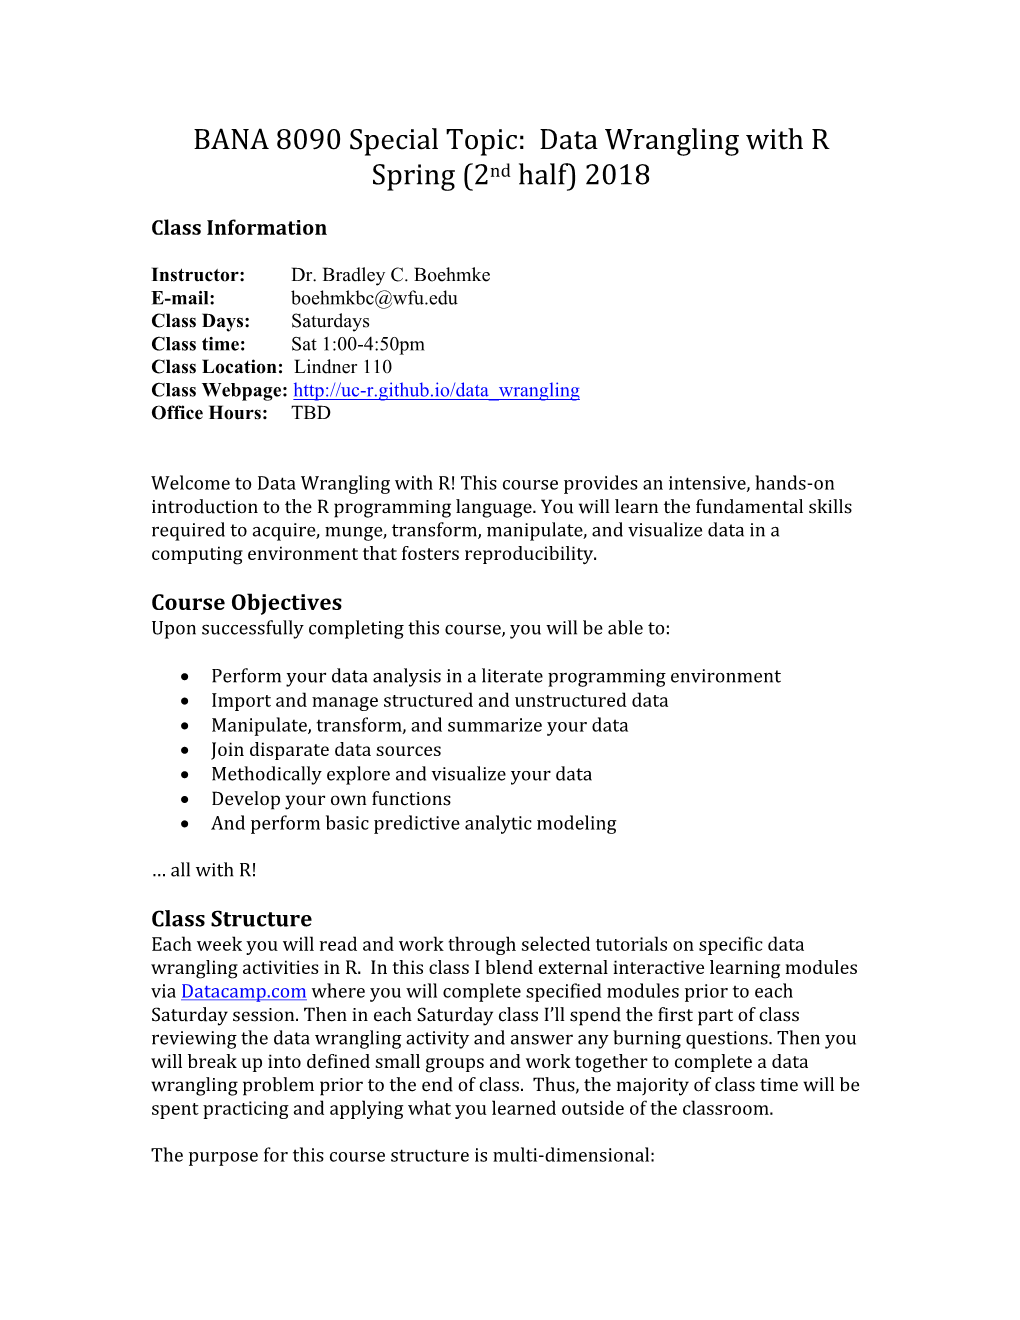 Data Wrangling with R Syllabus (2018 Spring)